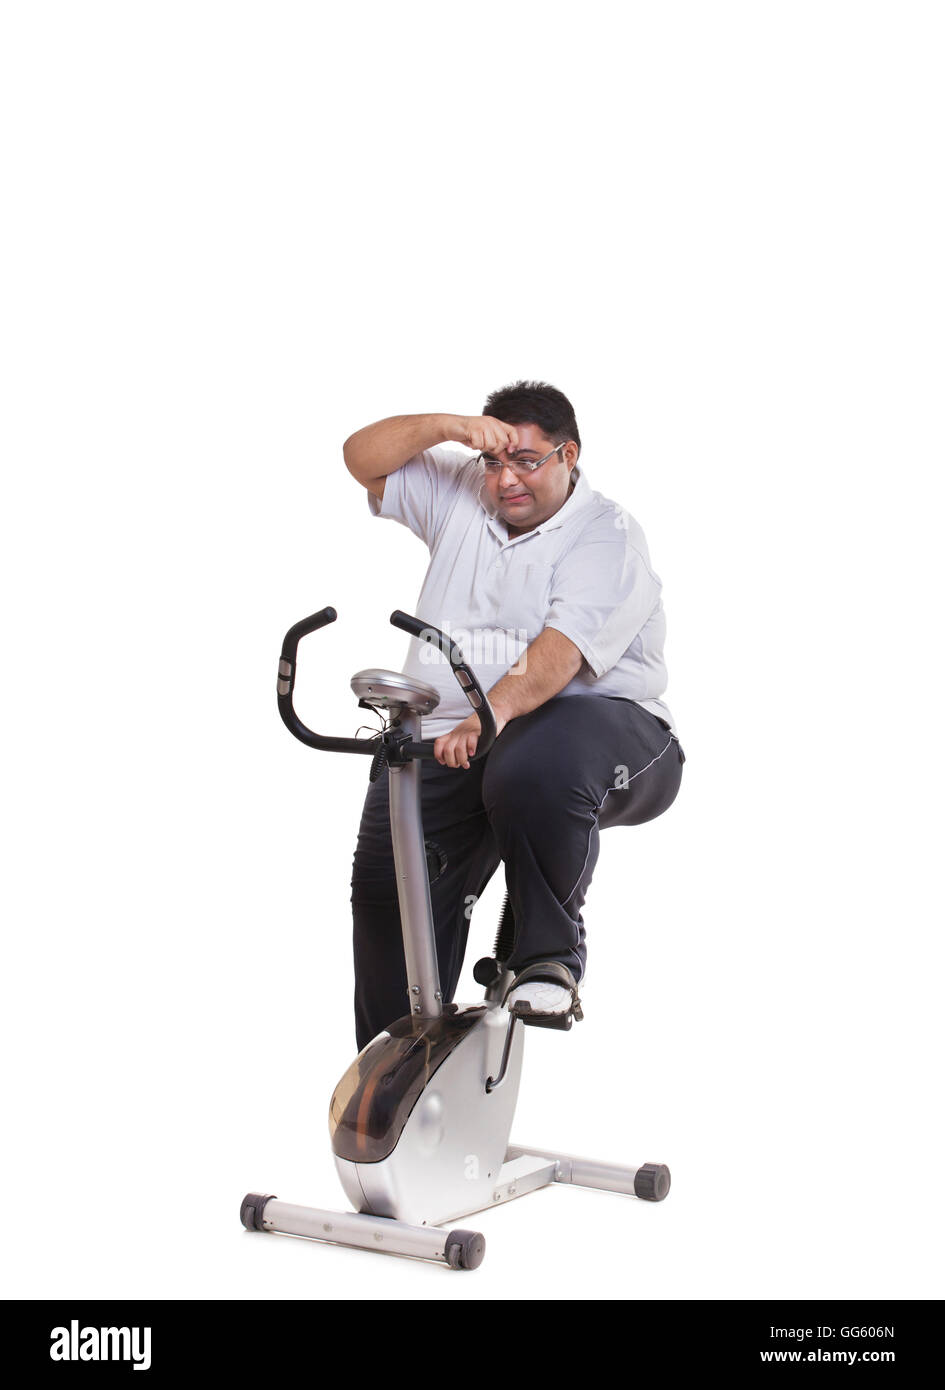 Obese man on exercise bike Stock Photo